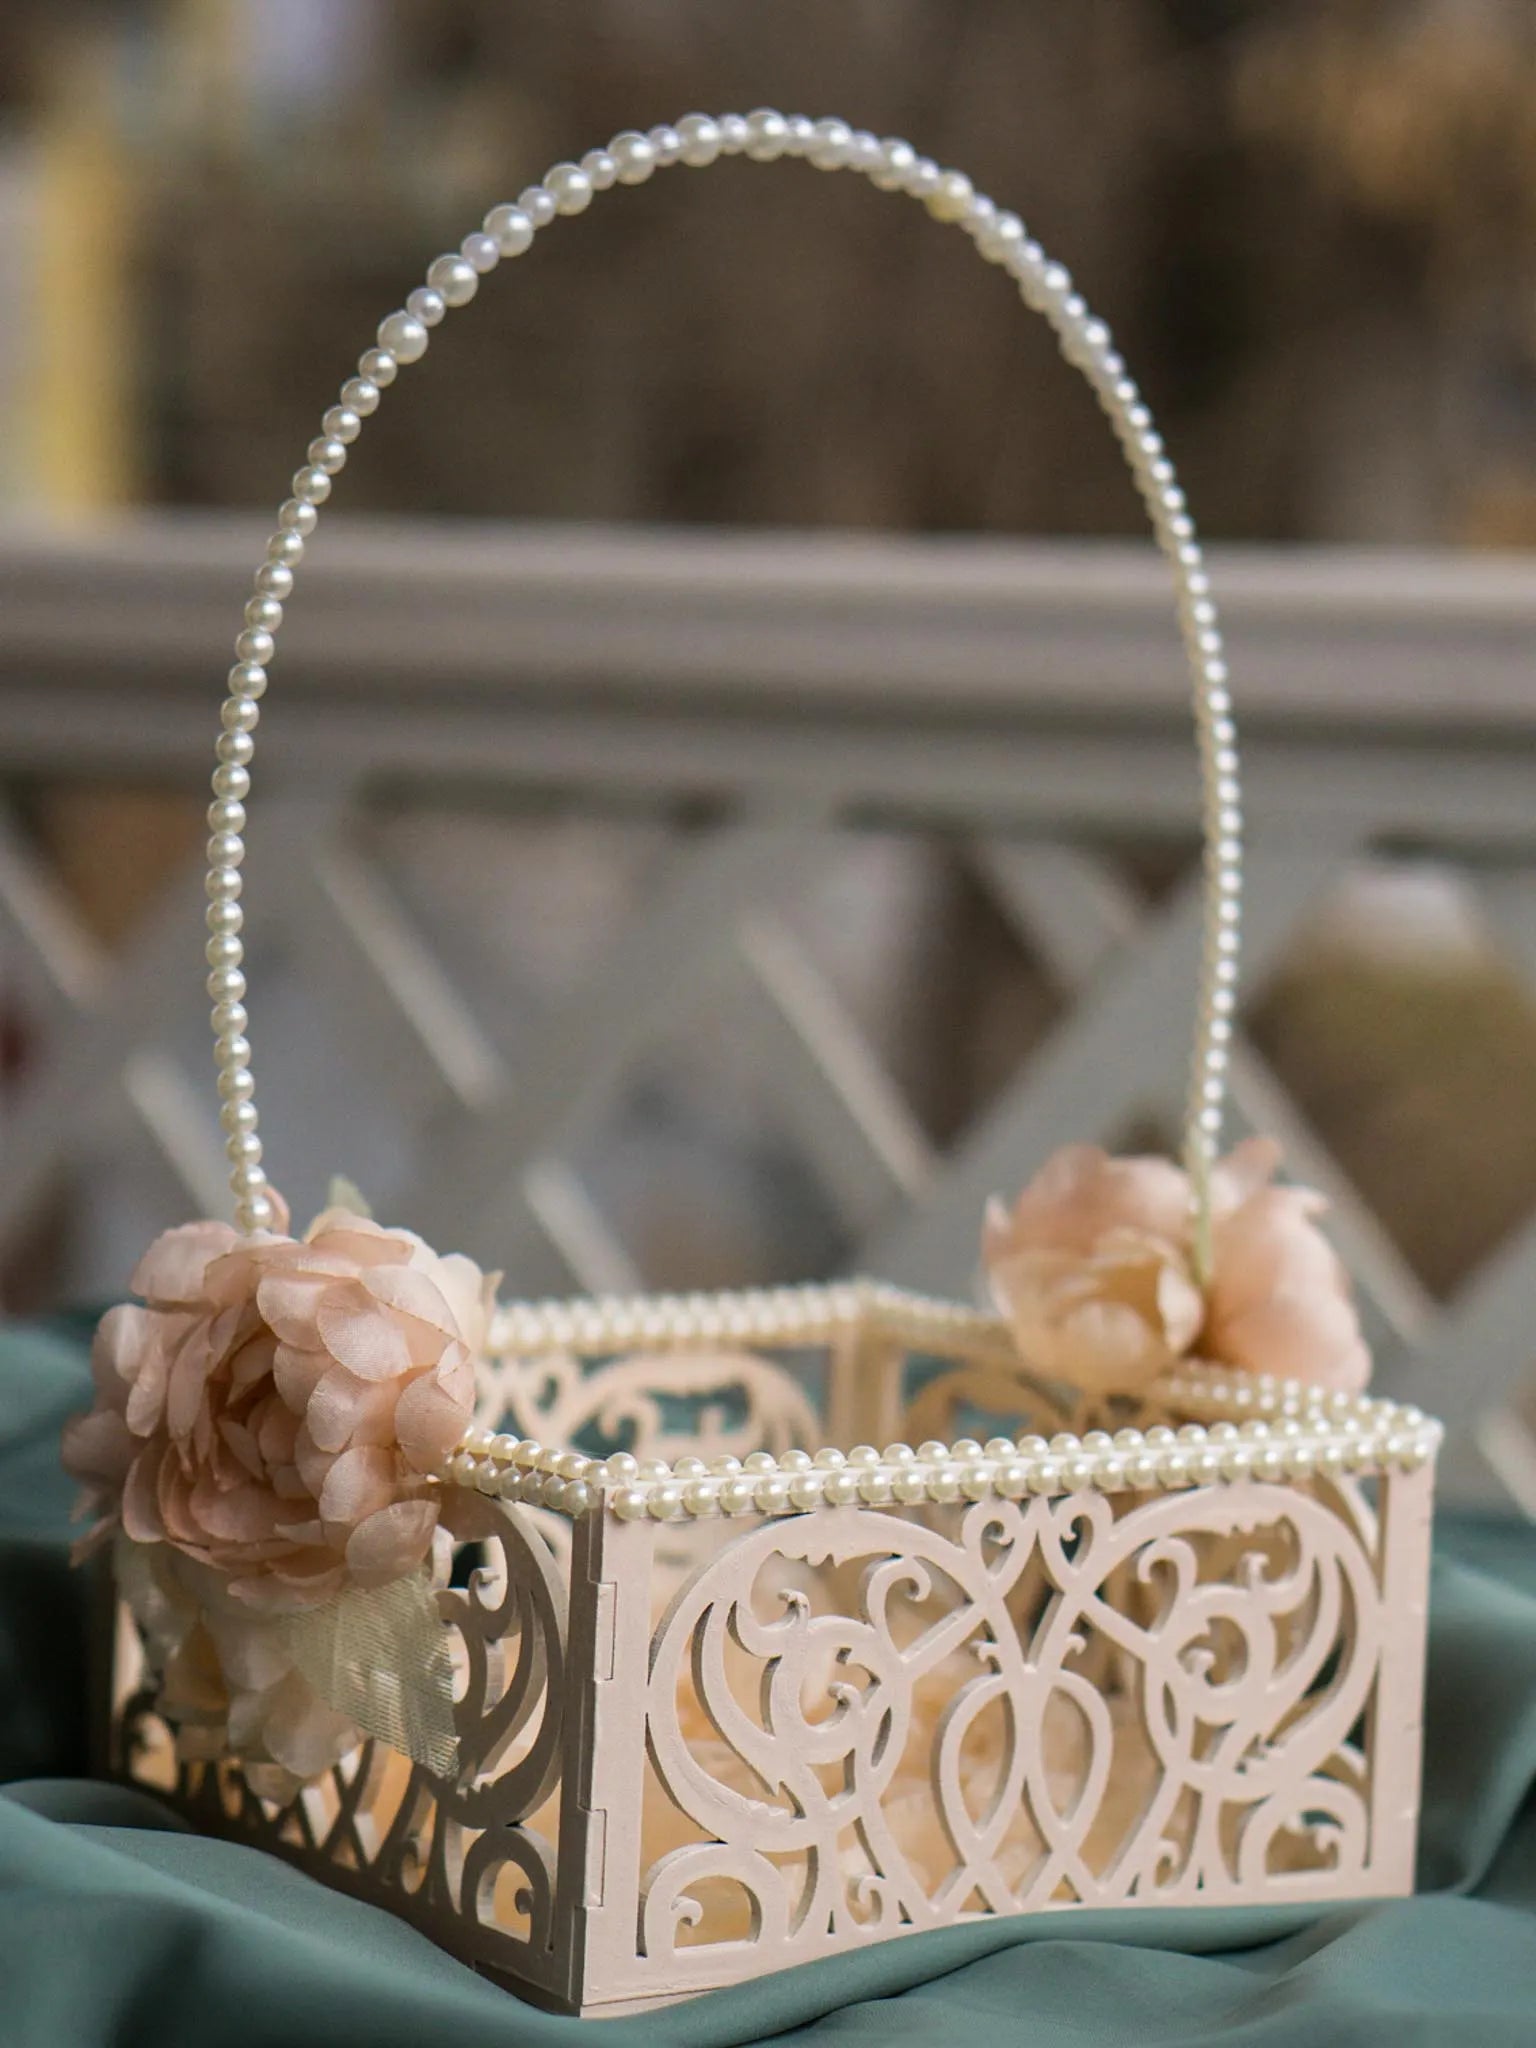 Handcrafted wooden flower basket